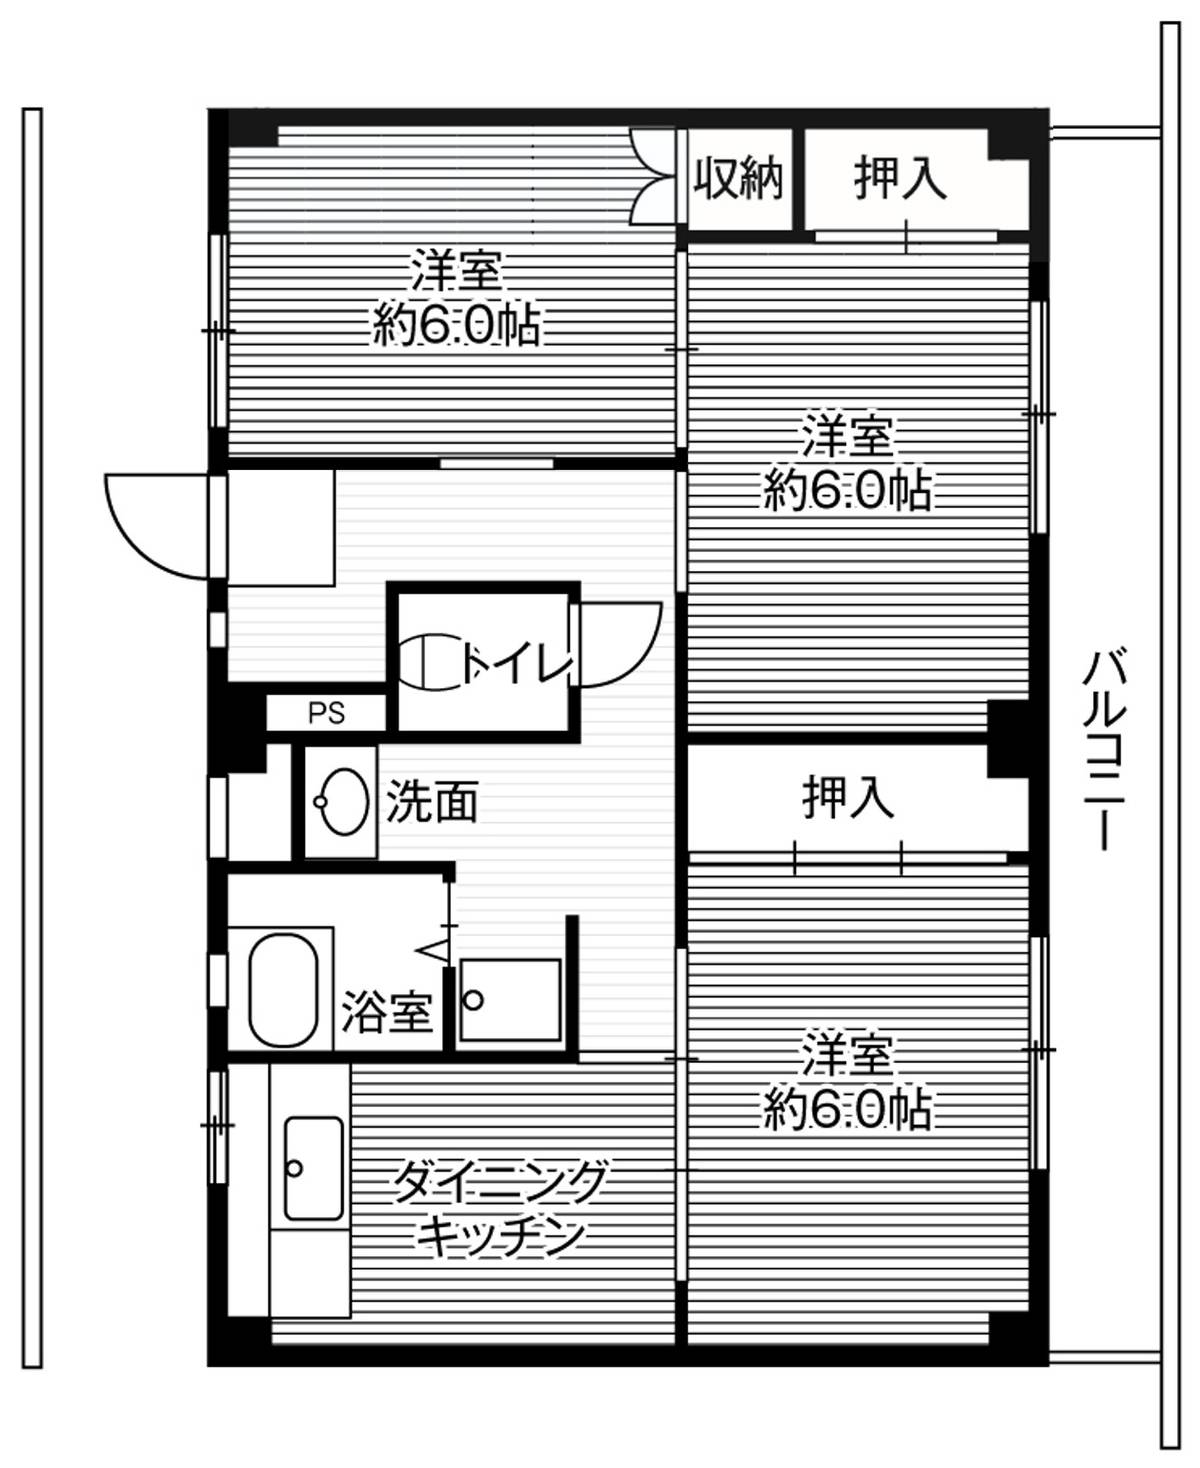 3DK floorplan of Village House Arakawa in Toyama-shi